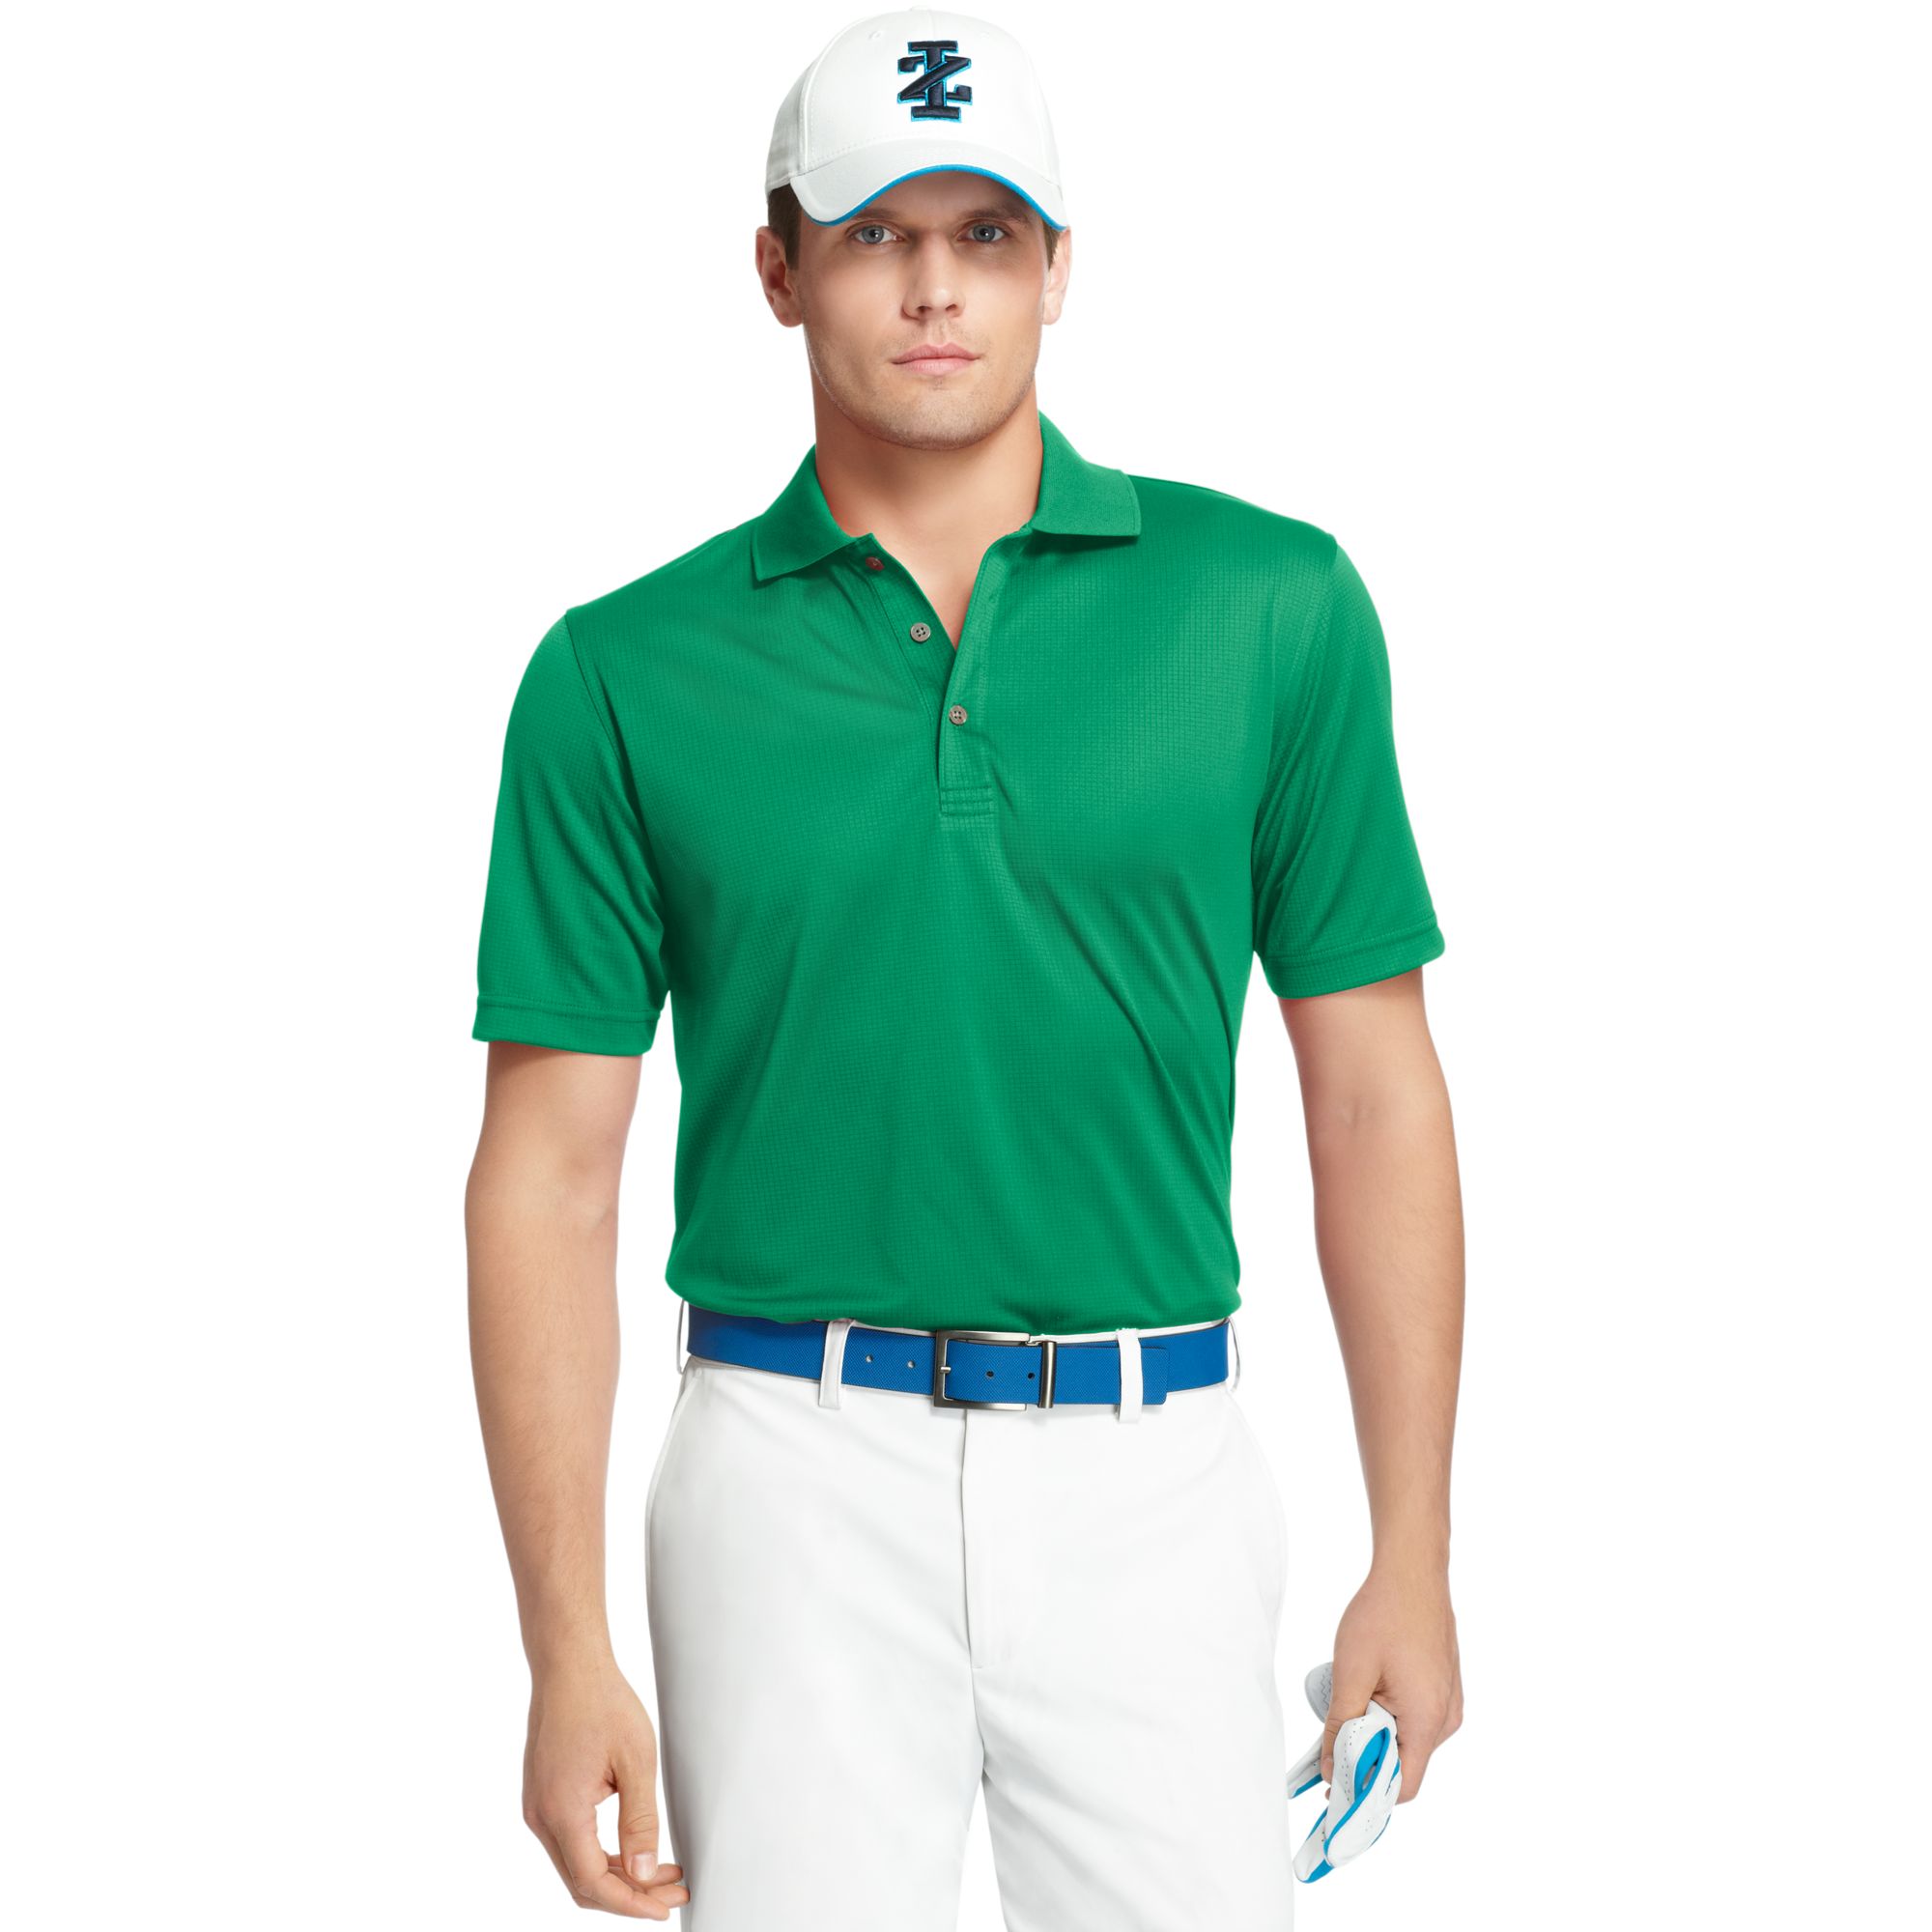 Izod Golf Shirt Uv Wicking Performance Solid Grid Polo Shirt in Green ...